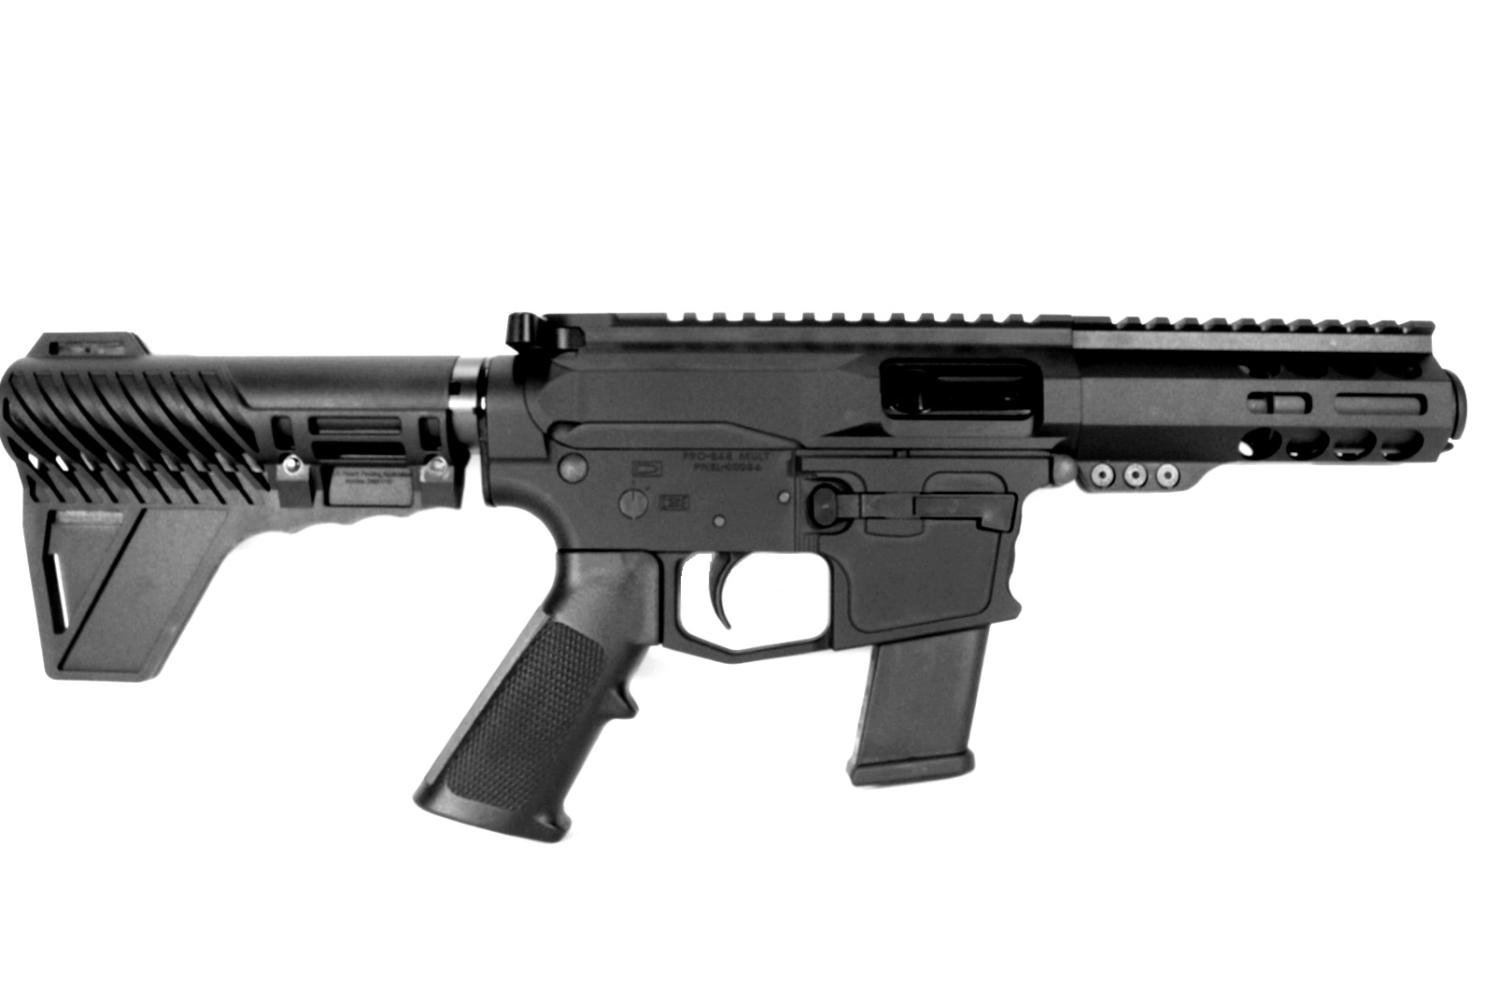 PATRIOT 3 inch 45 ACP M-LOK AR-15/AR-45 Pistol - $679.99 after 15% off